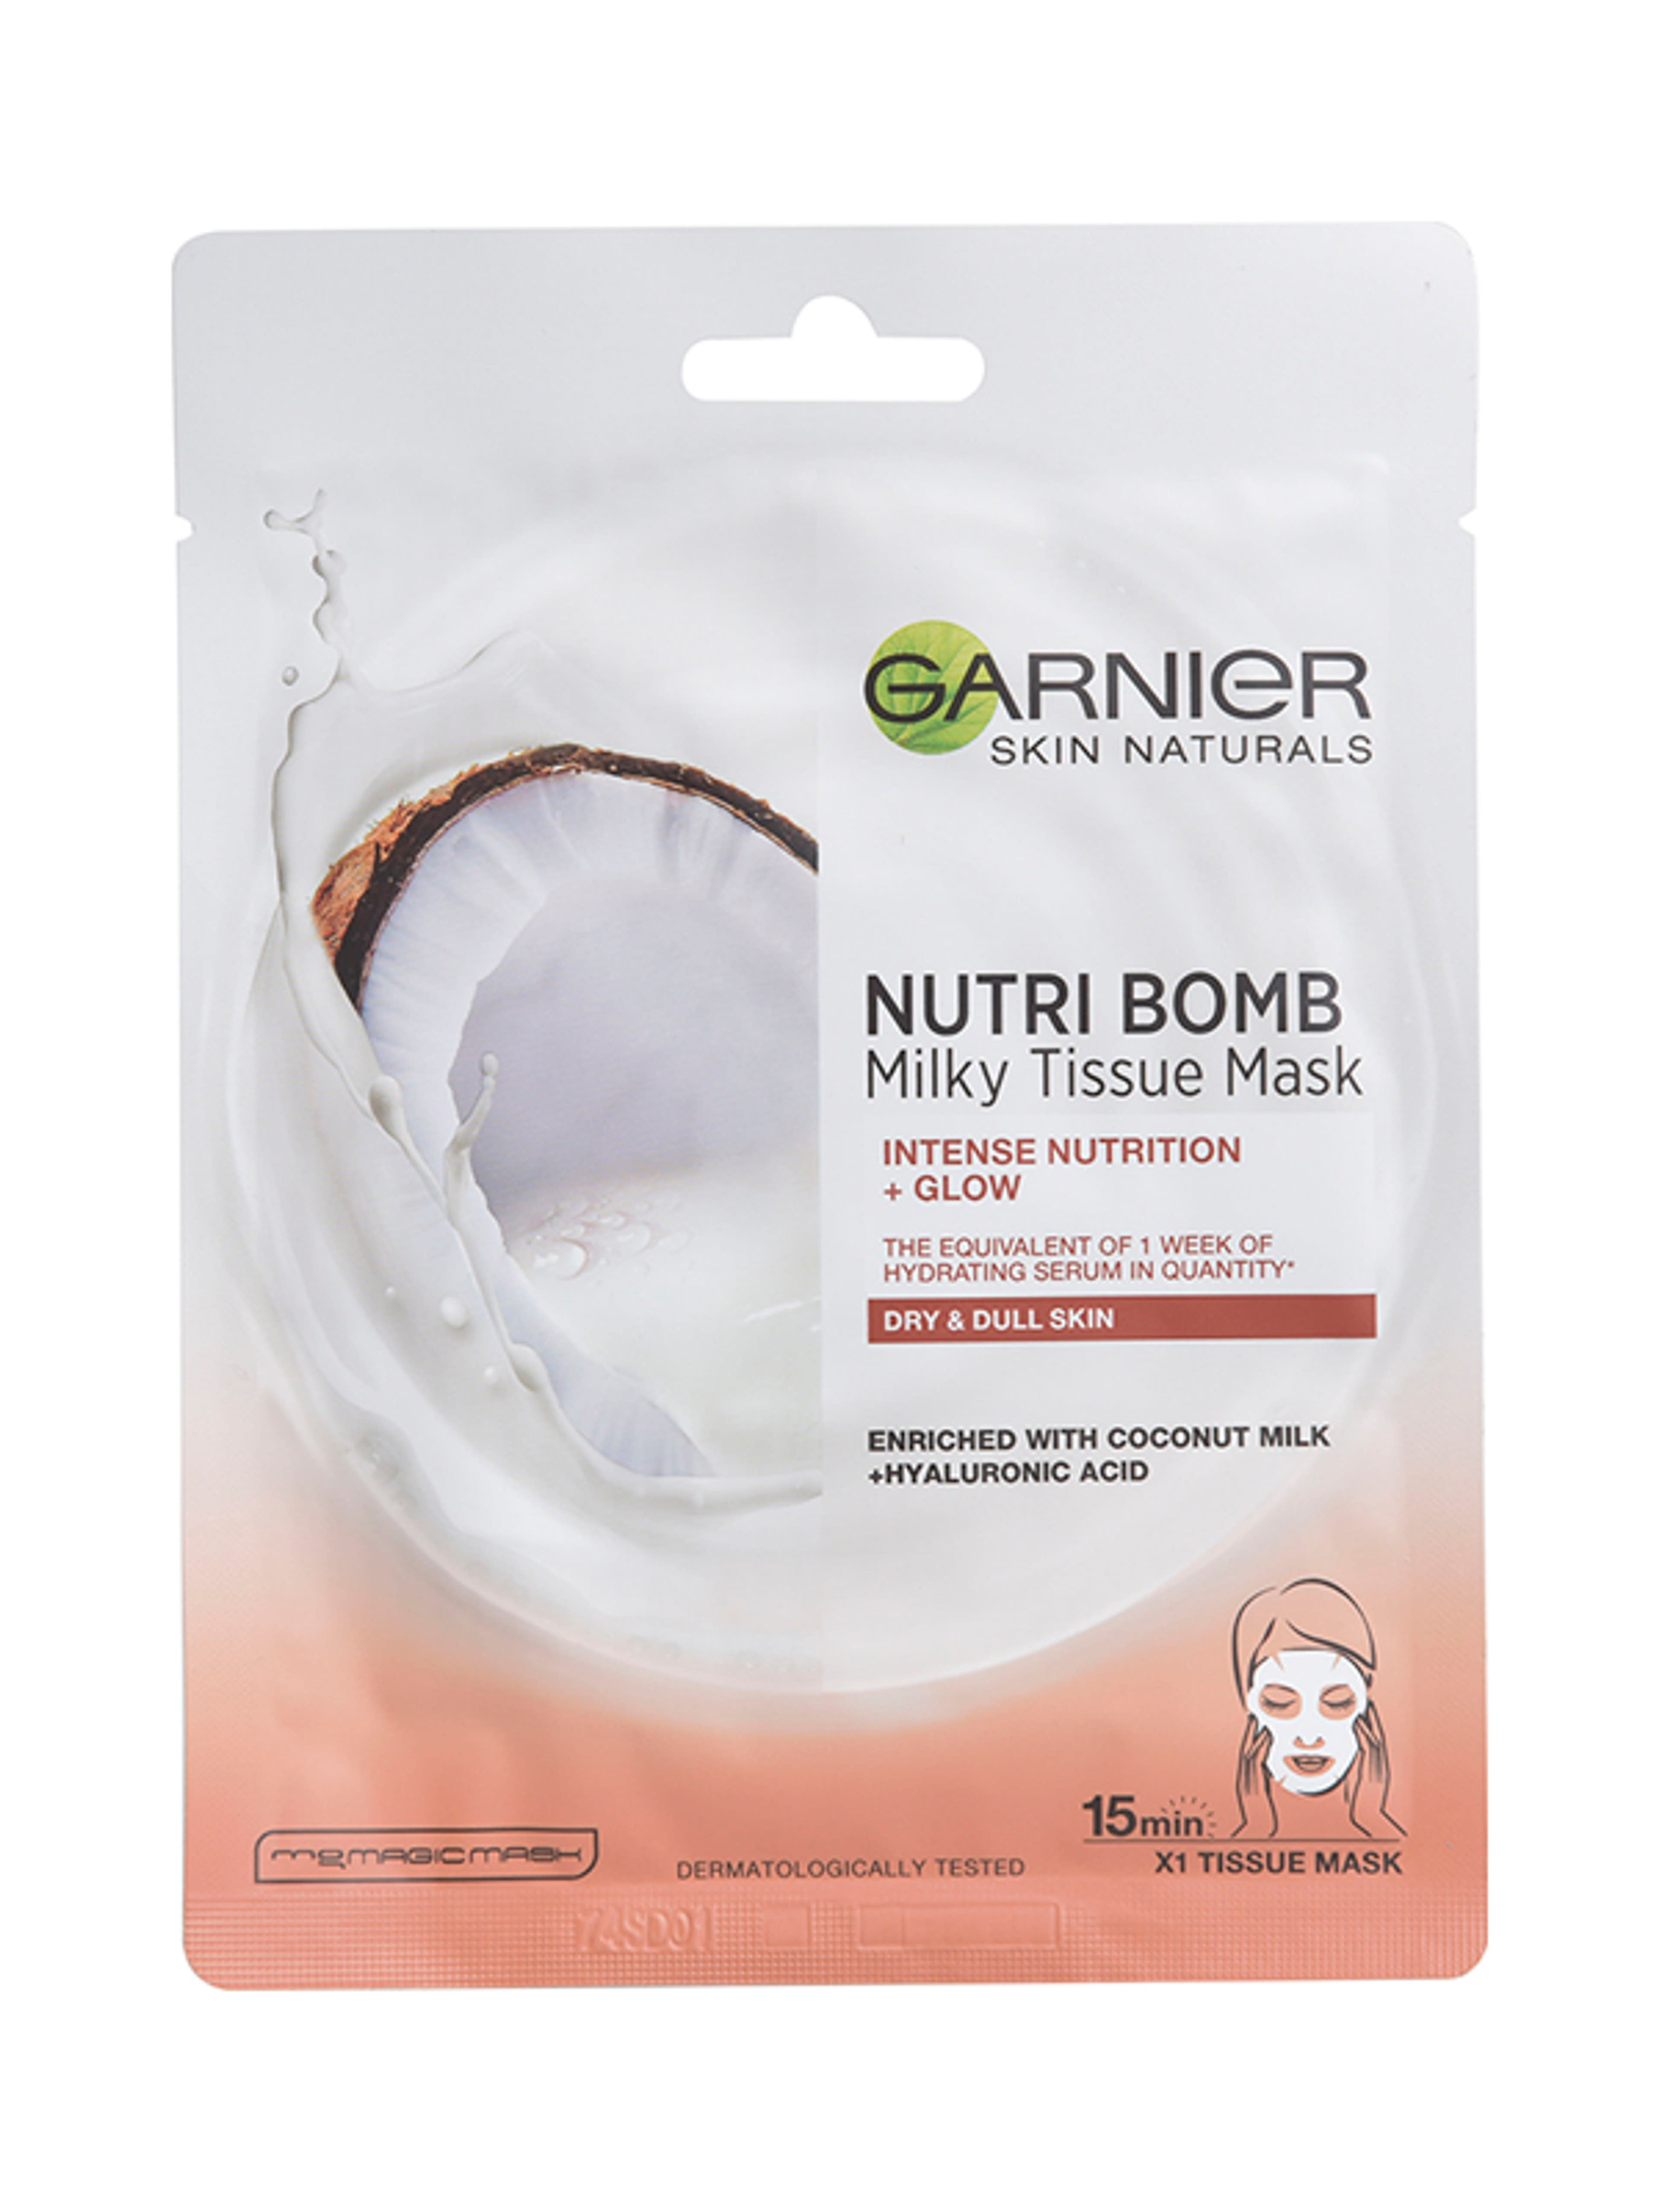 Garnier Skin Naturals Nutribomb Coco textil maszk - 28 g-1